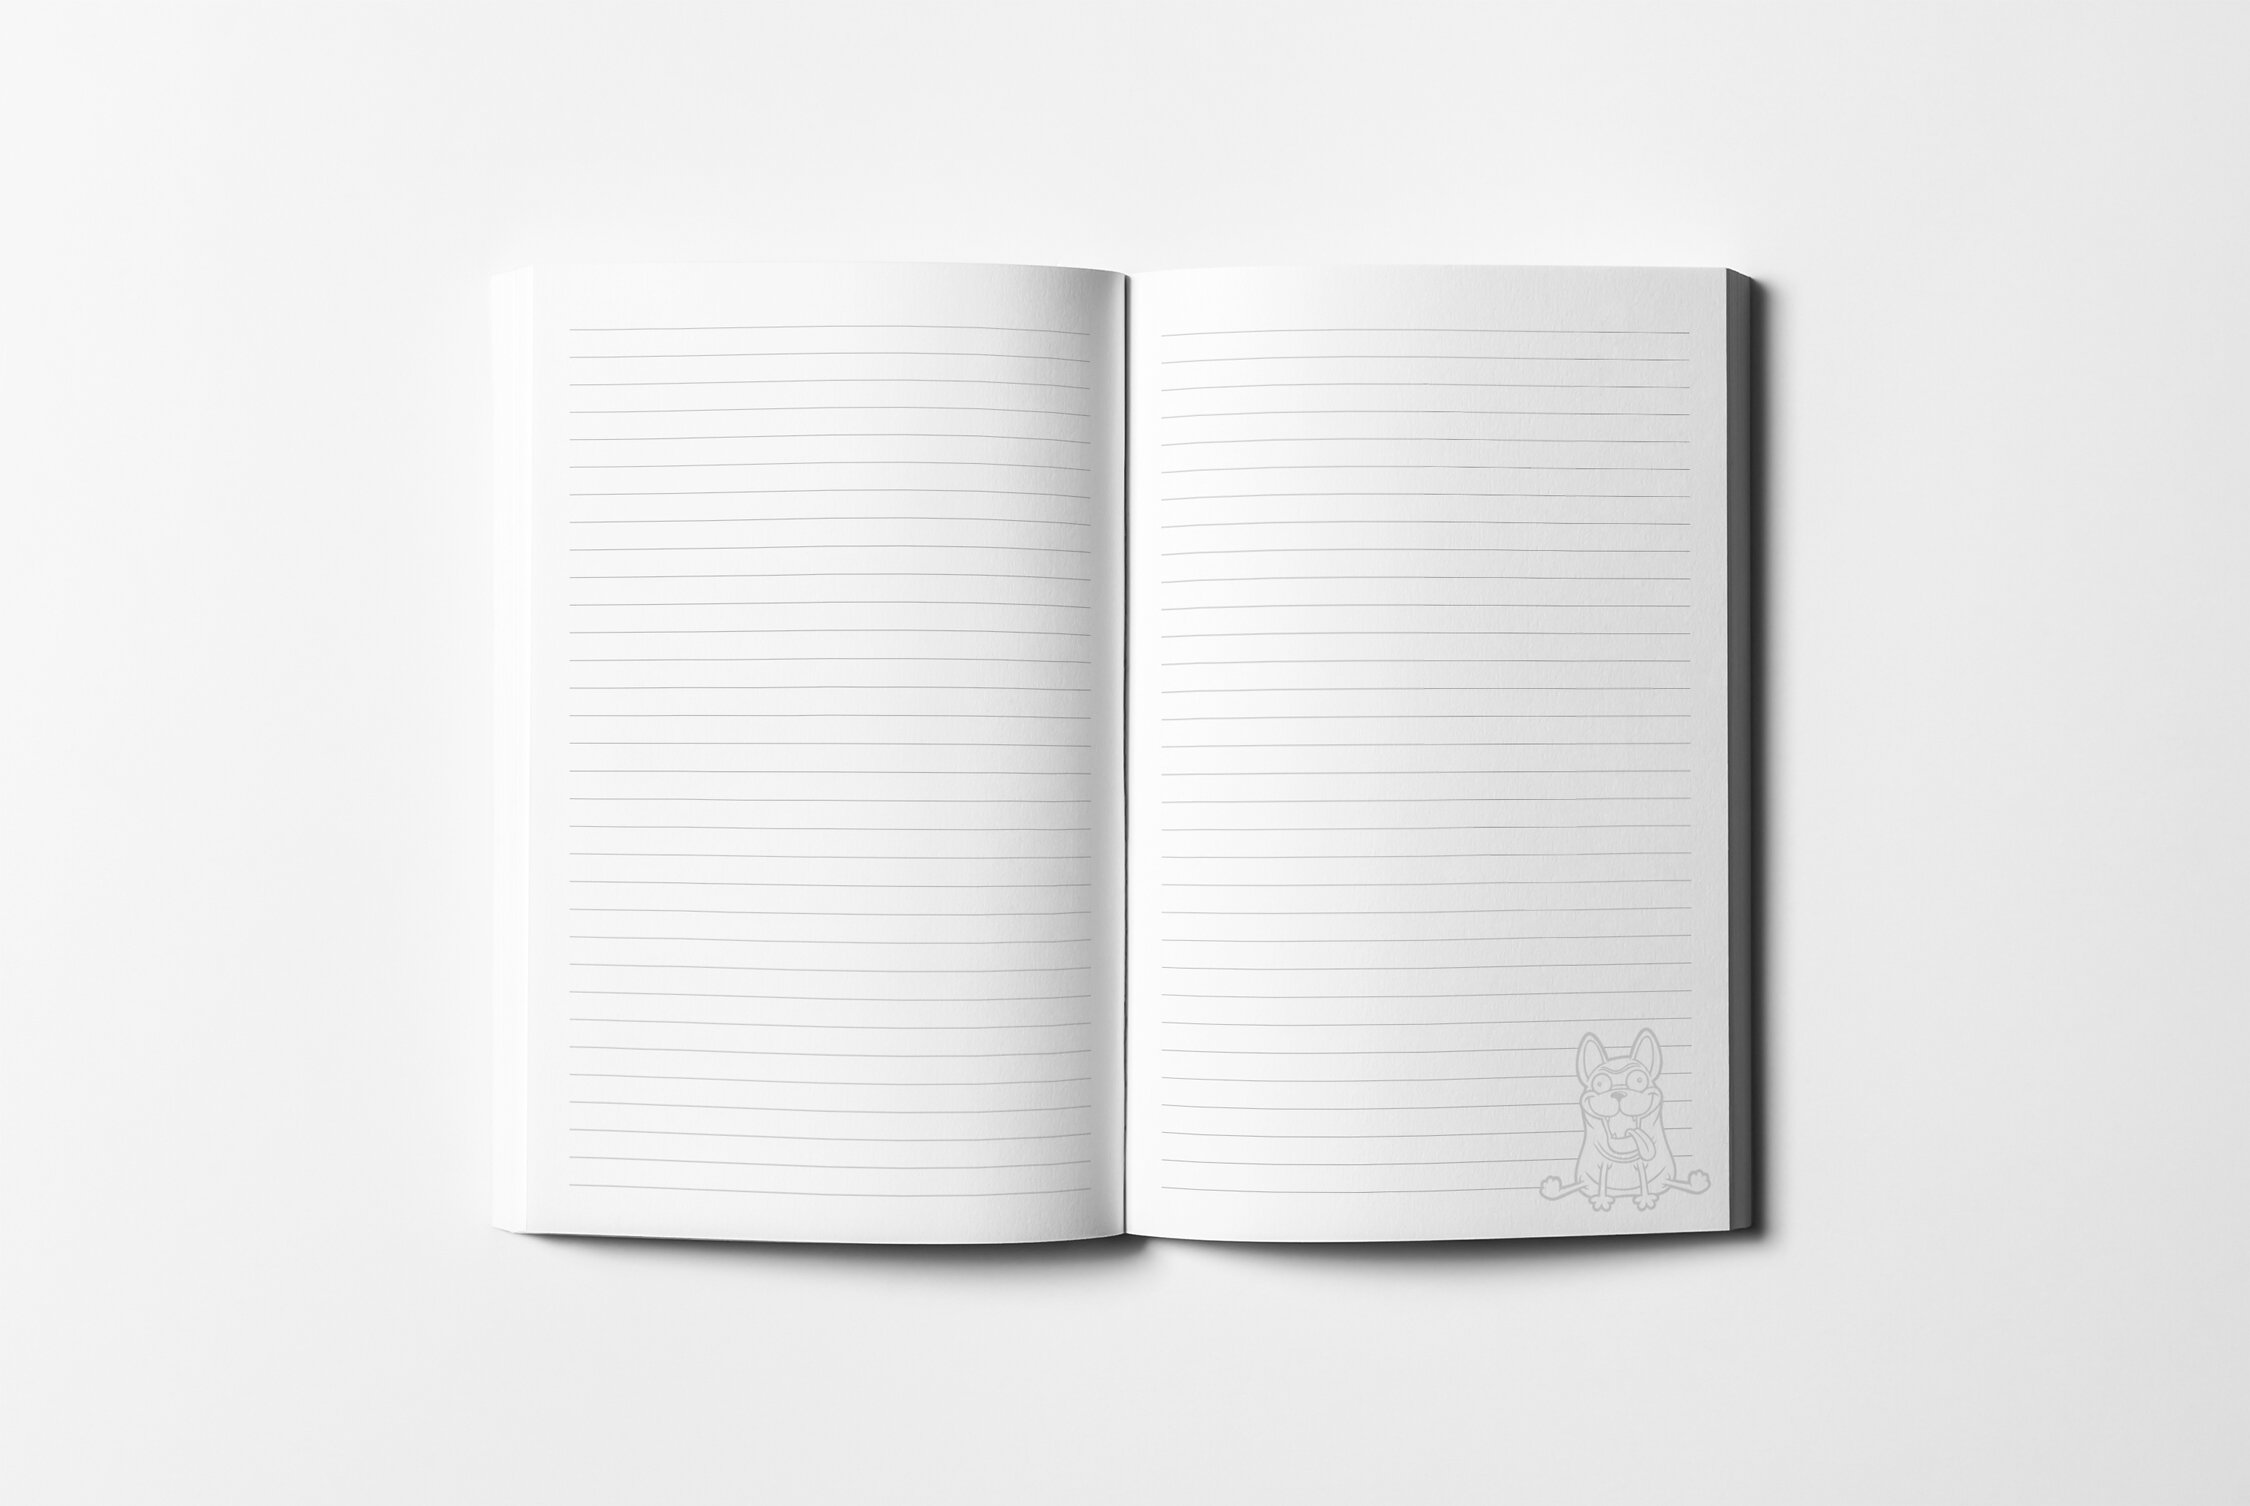 6x9-DogAlwaysHungry-Notebook-Mockup-Inside-02.jpg